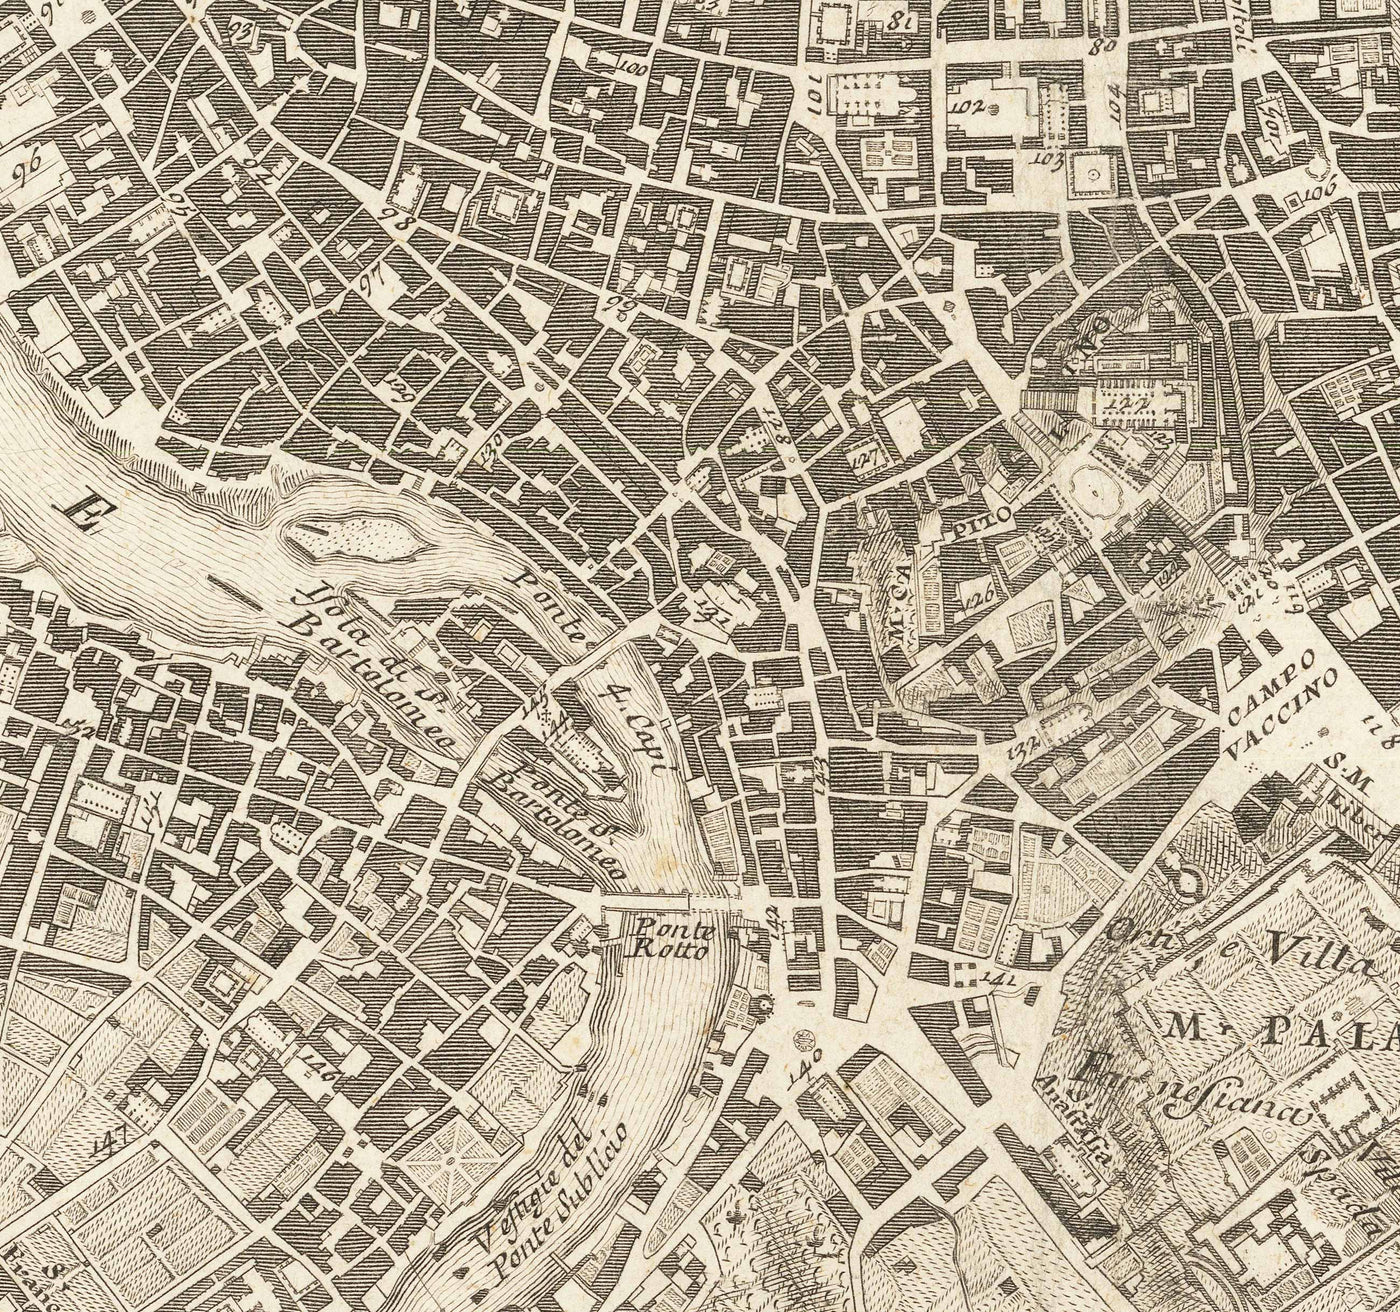 Seltene alte Karte von Rom, Italien von Nolli & Piranesi, 1748 - Vatikan, St. Peter's Basilica, Trevi Fountain, Kolosseum